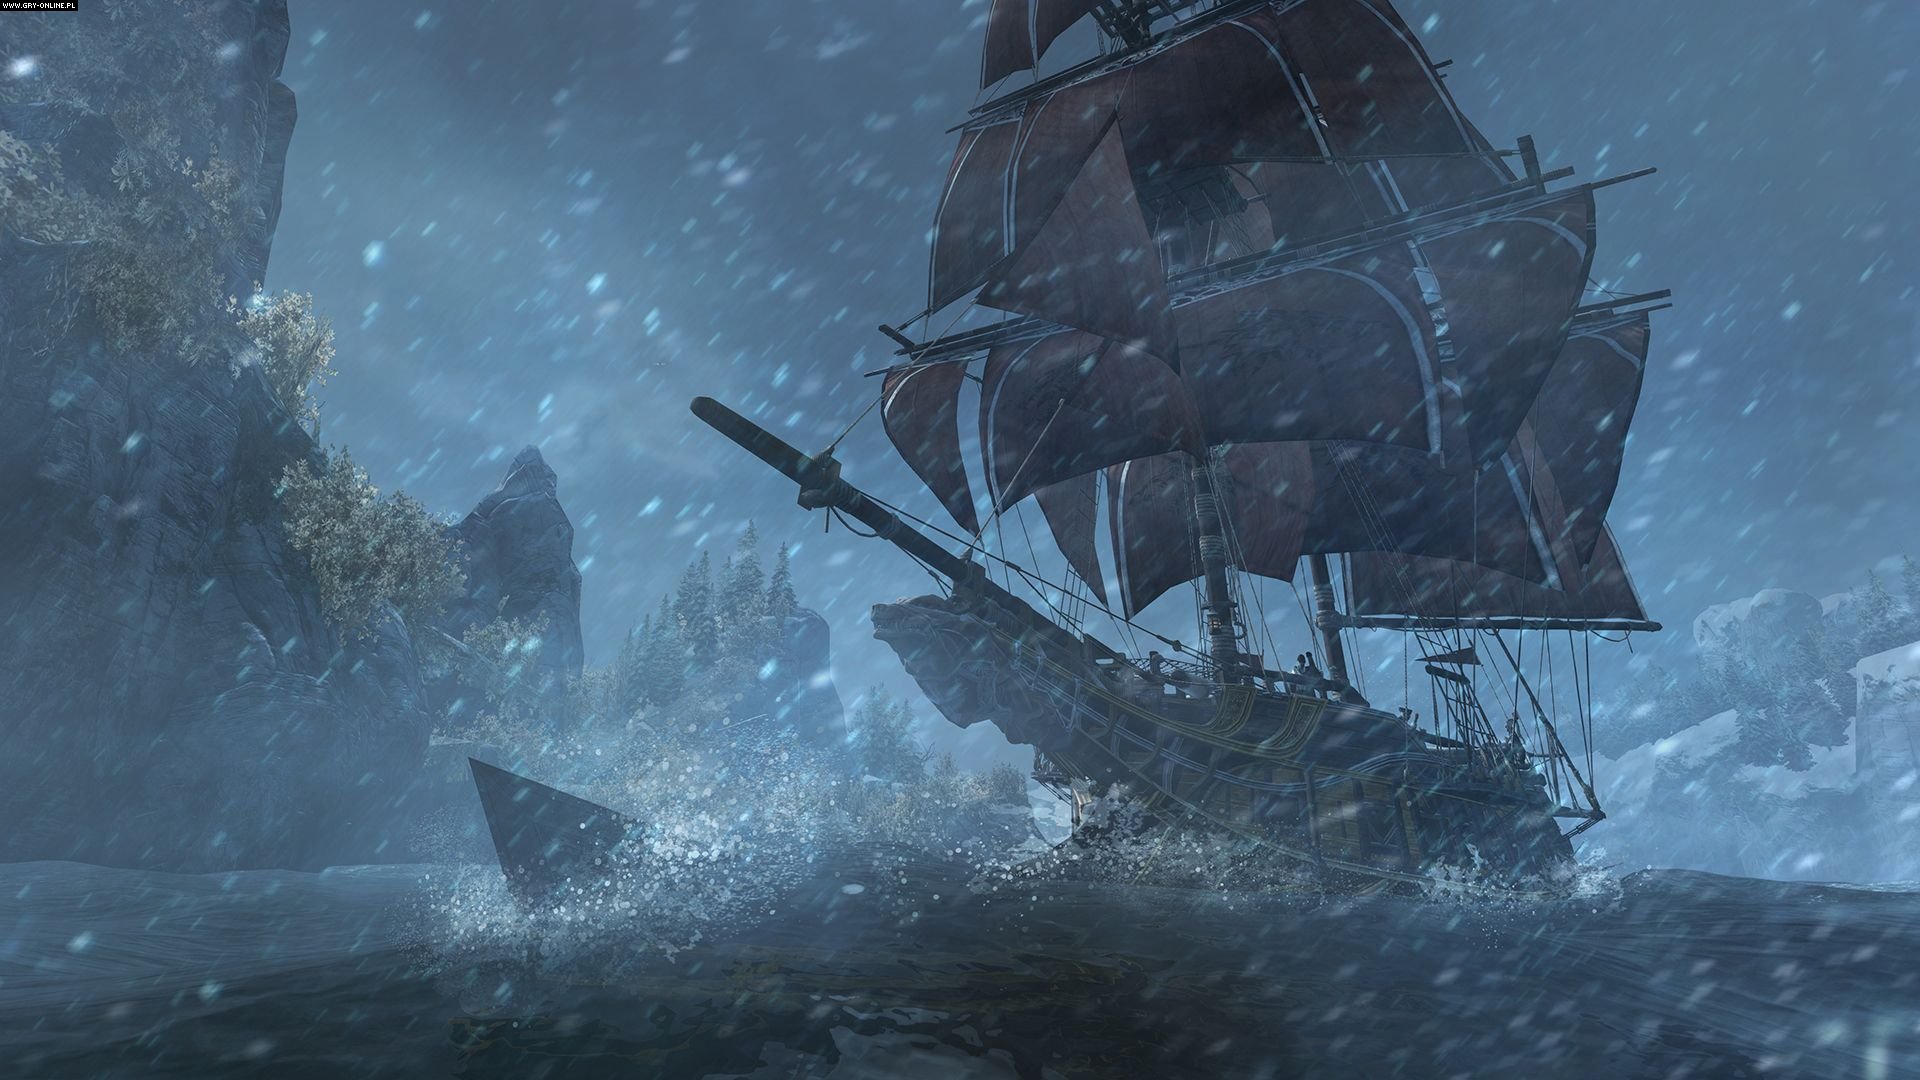 Screenshots gallery - Assassin's Creed: Rogue, screenshot 4 / 30